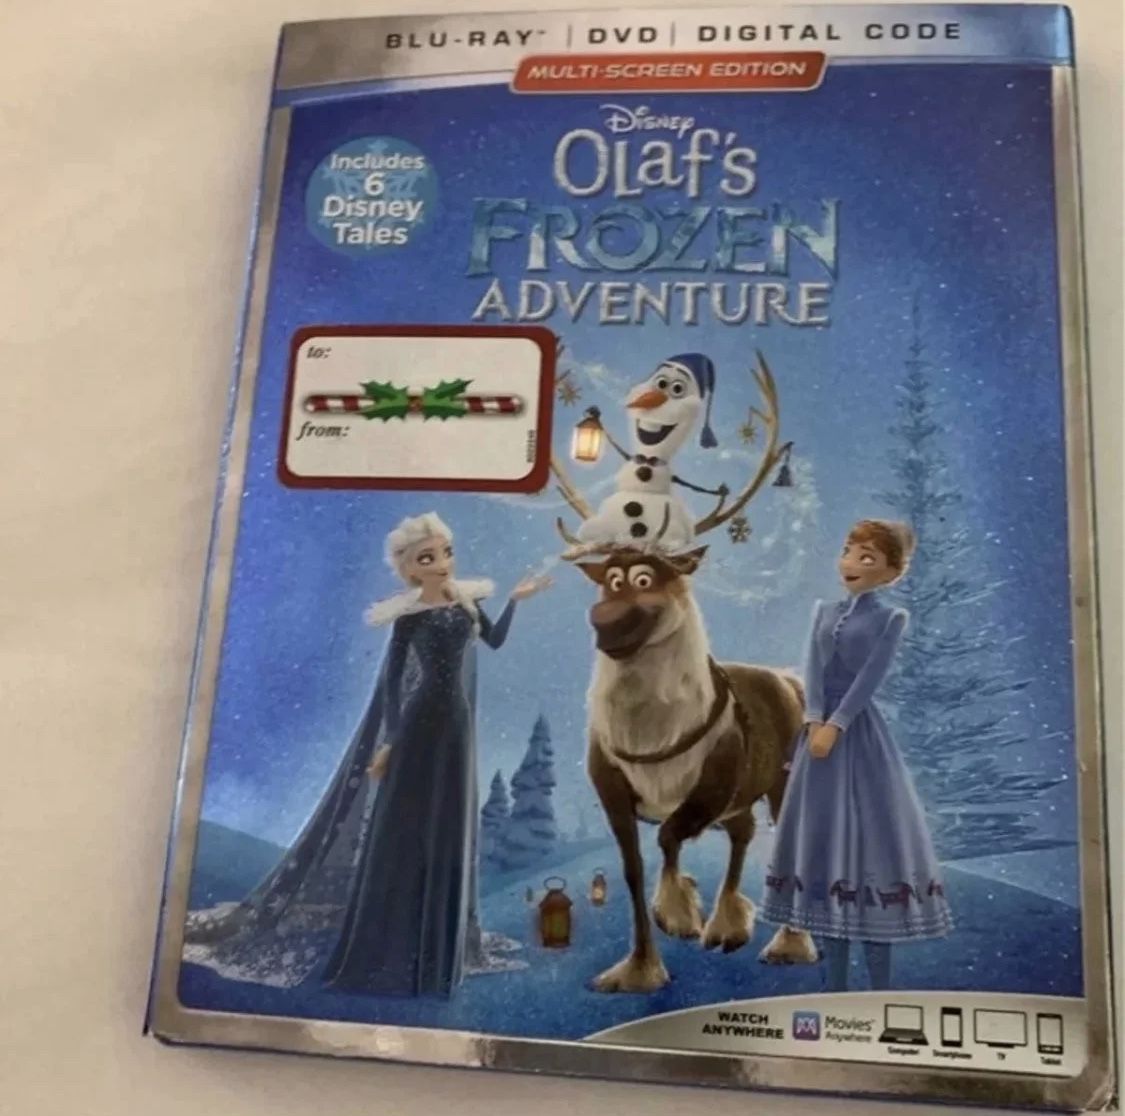 BRAND NEW Disney Olafs frozen adventure blueray and dvd